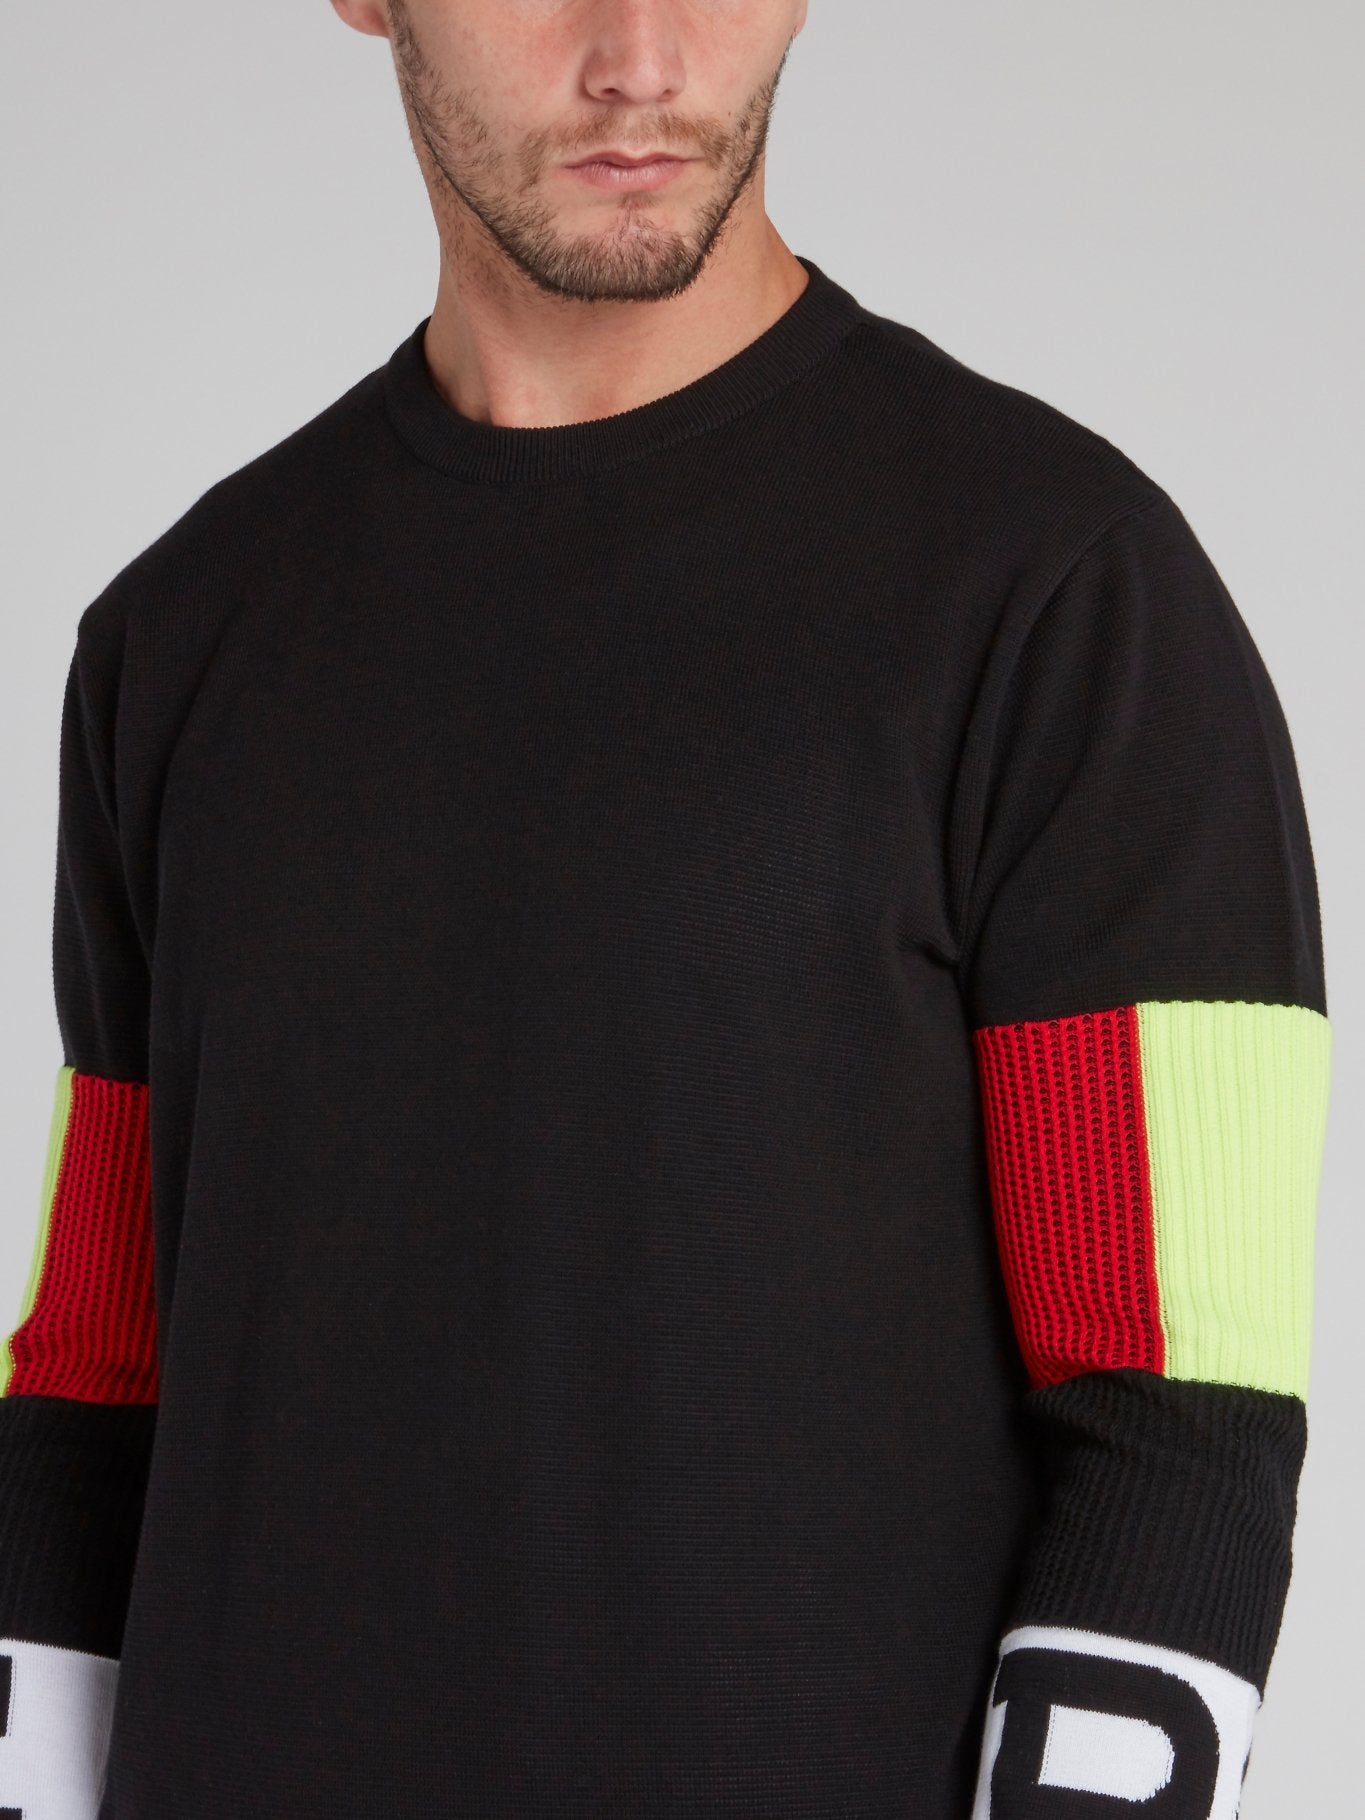 Black Sleeve Colour Block Sweater